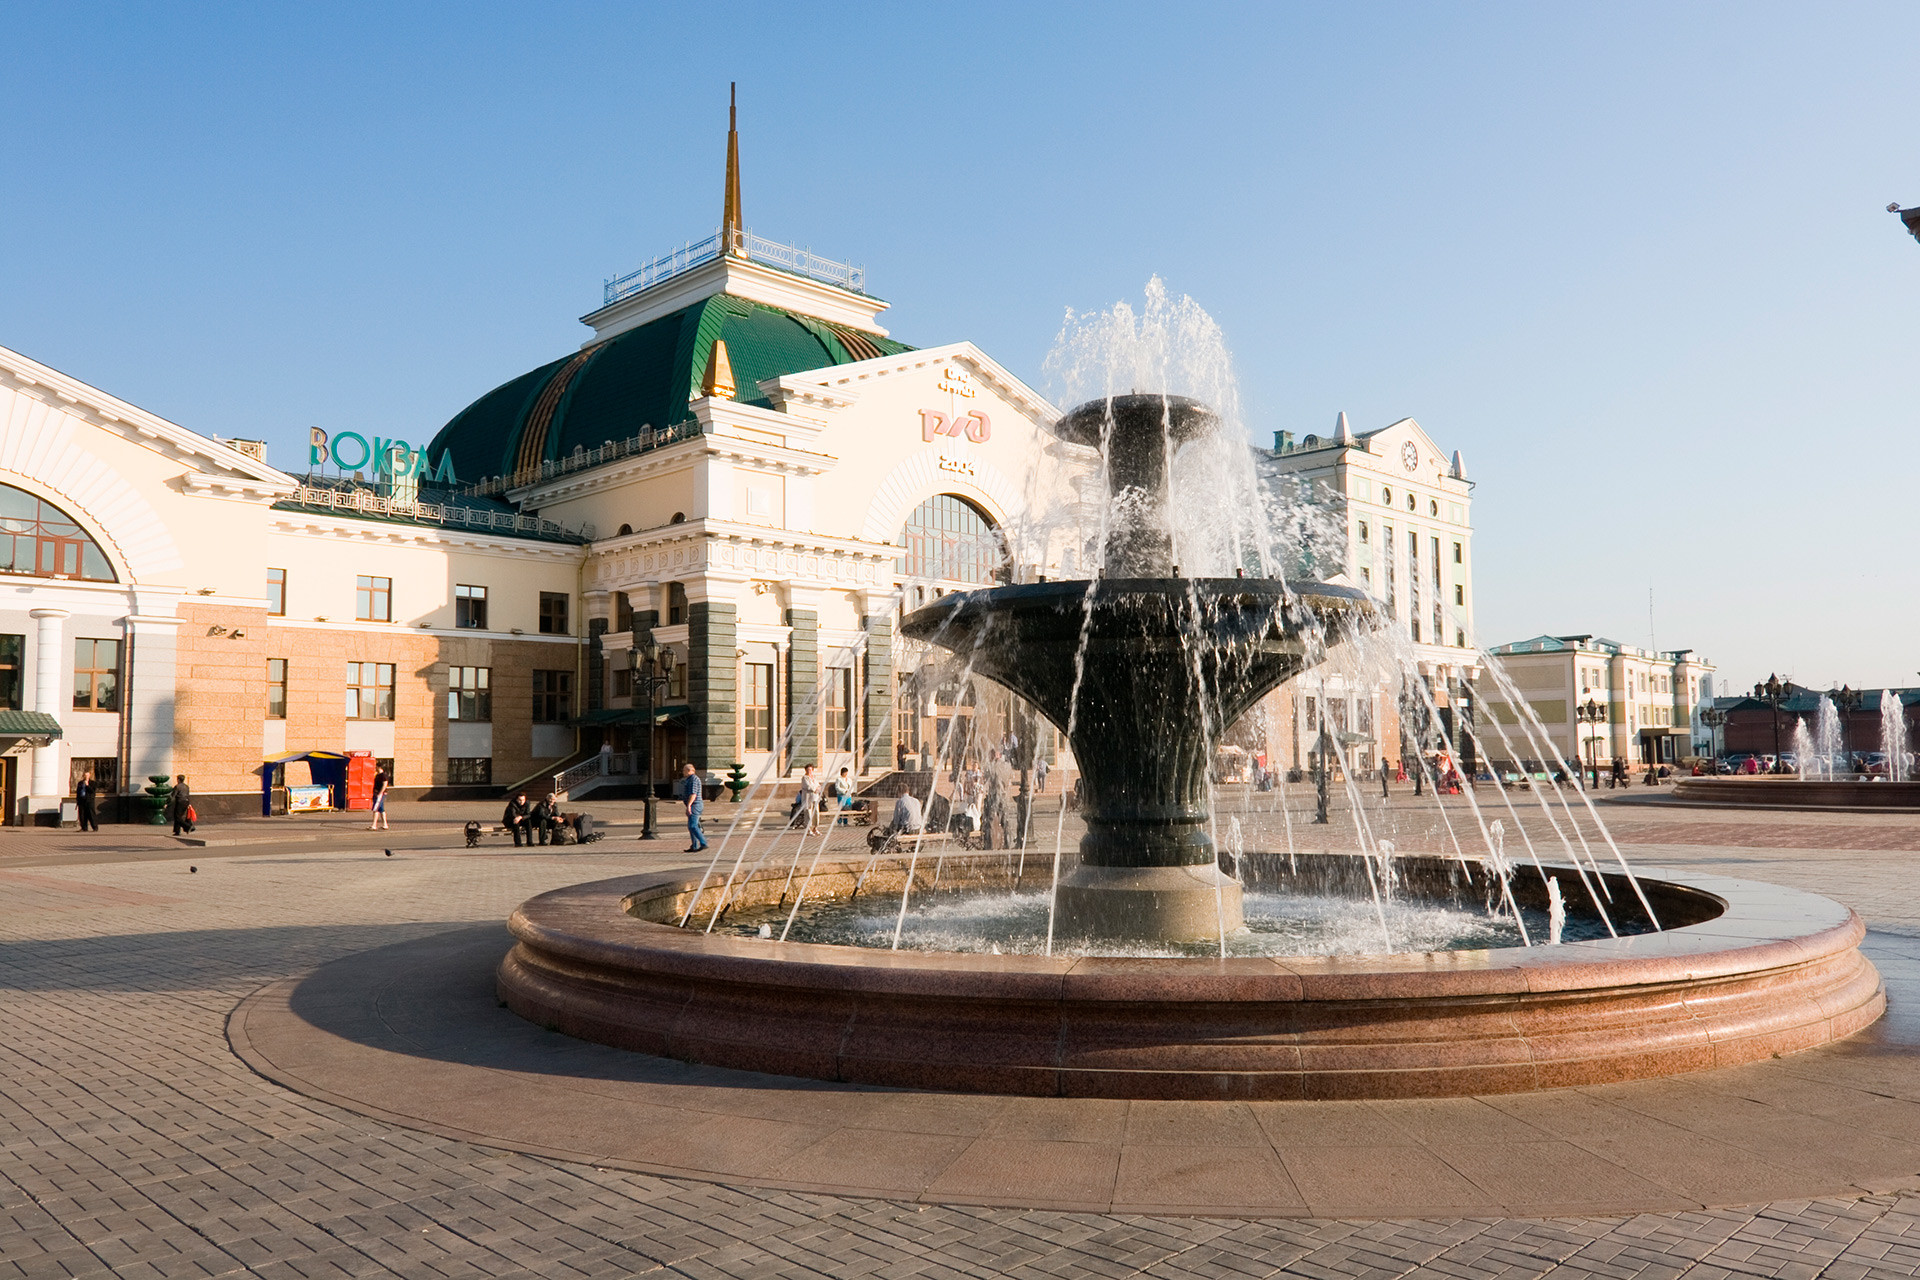 The fountain next to the railway station building in Krasnoyarsk.